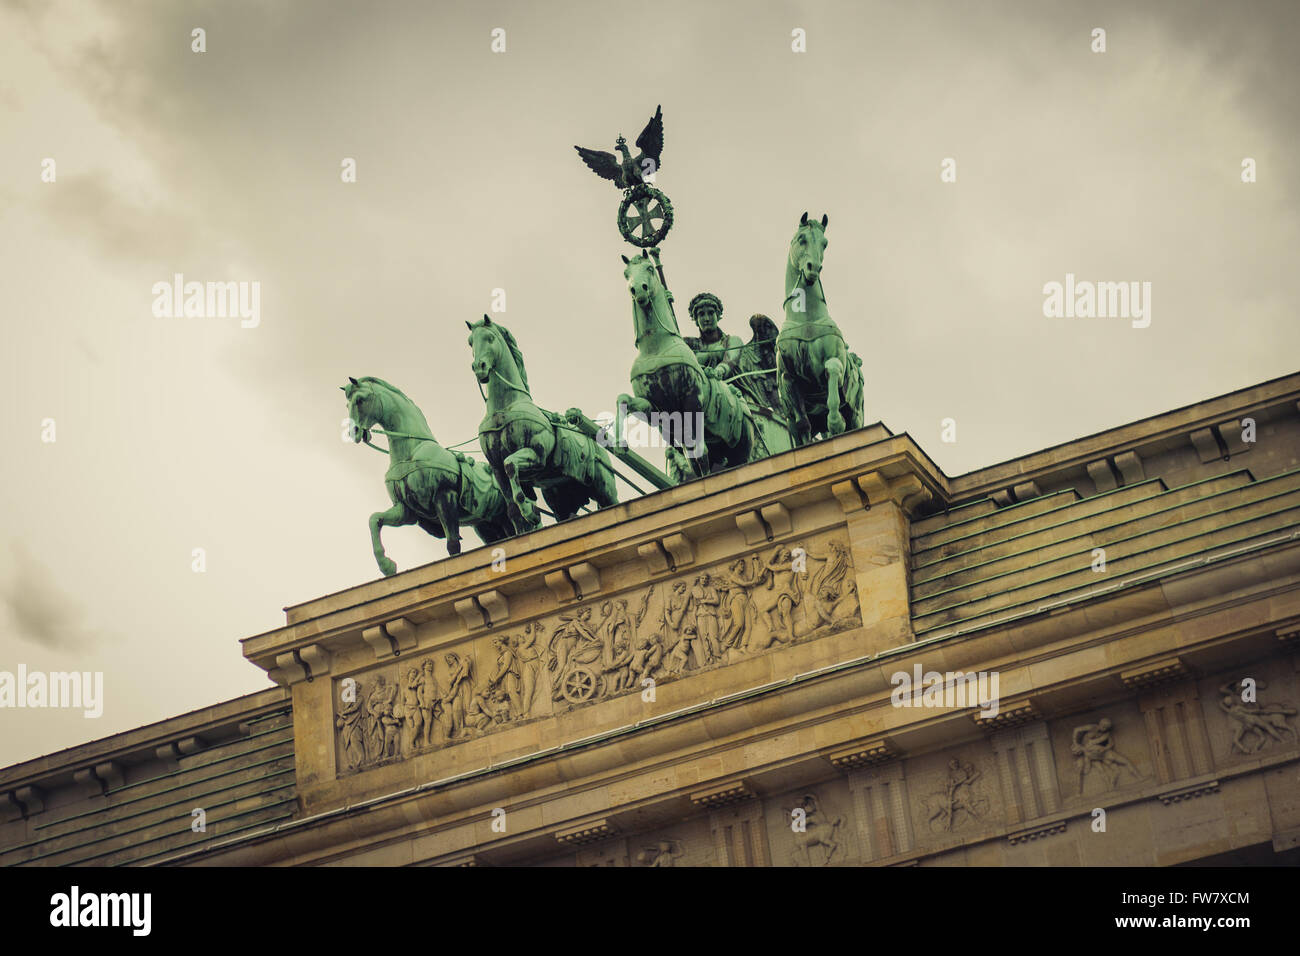 Quadriga - Parte superior de la puerta de Brandenburgo (Brandenburger Tor) en Berlín - estilo retro foto Foto de stock